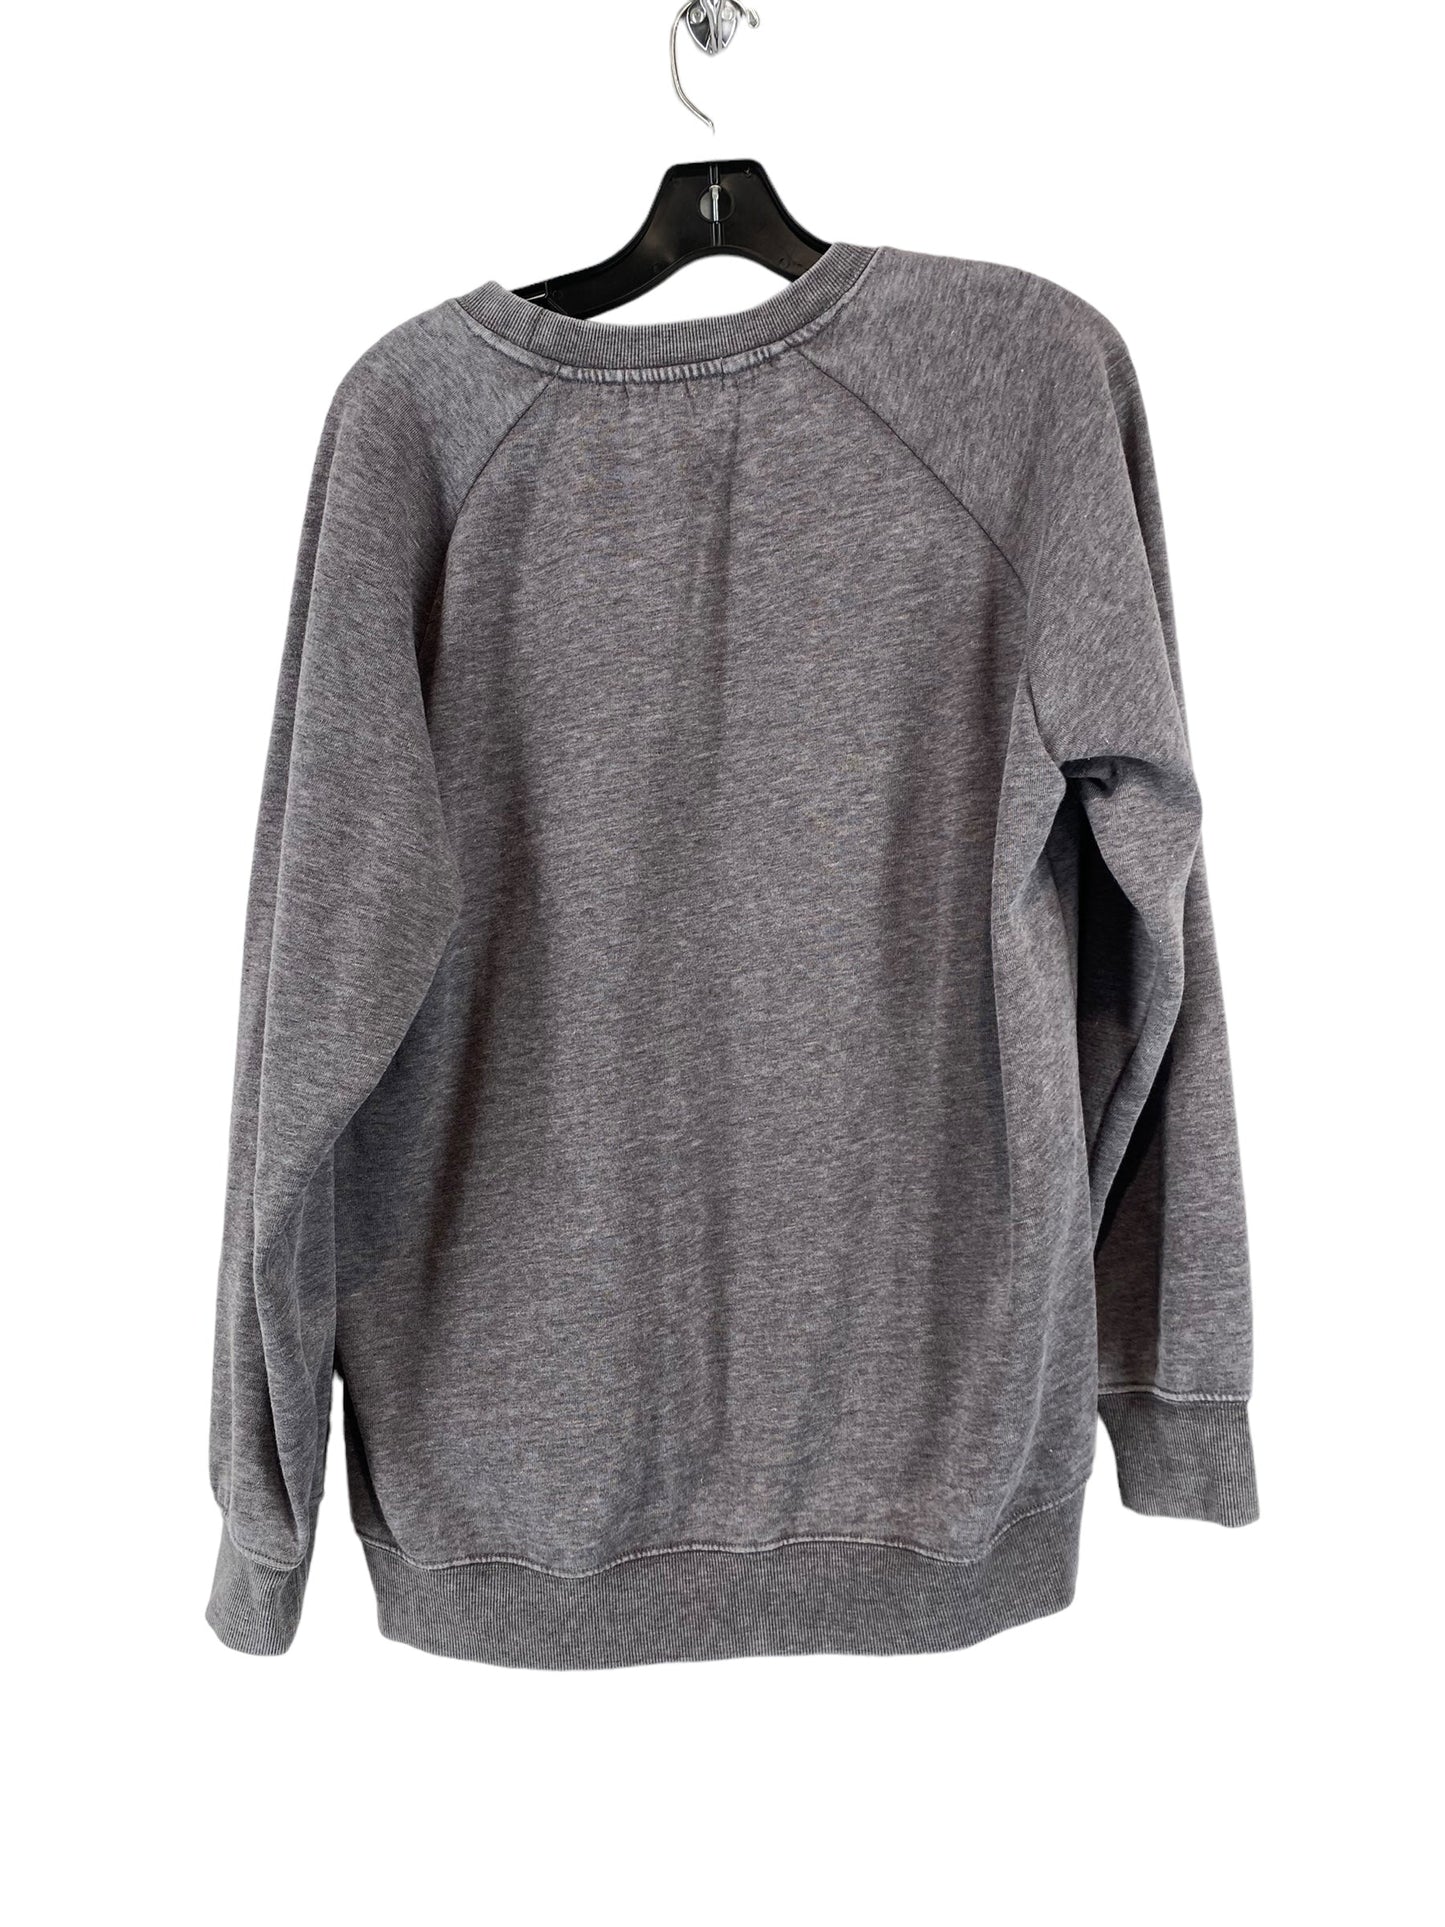 Grey Sweatshirt Crewneck Simply Southern, Size M